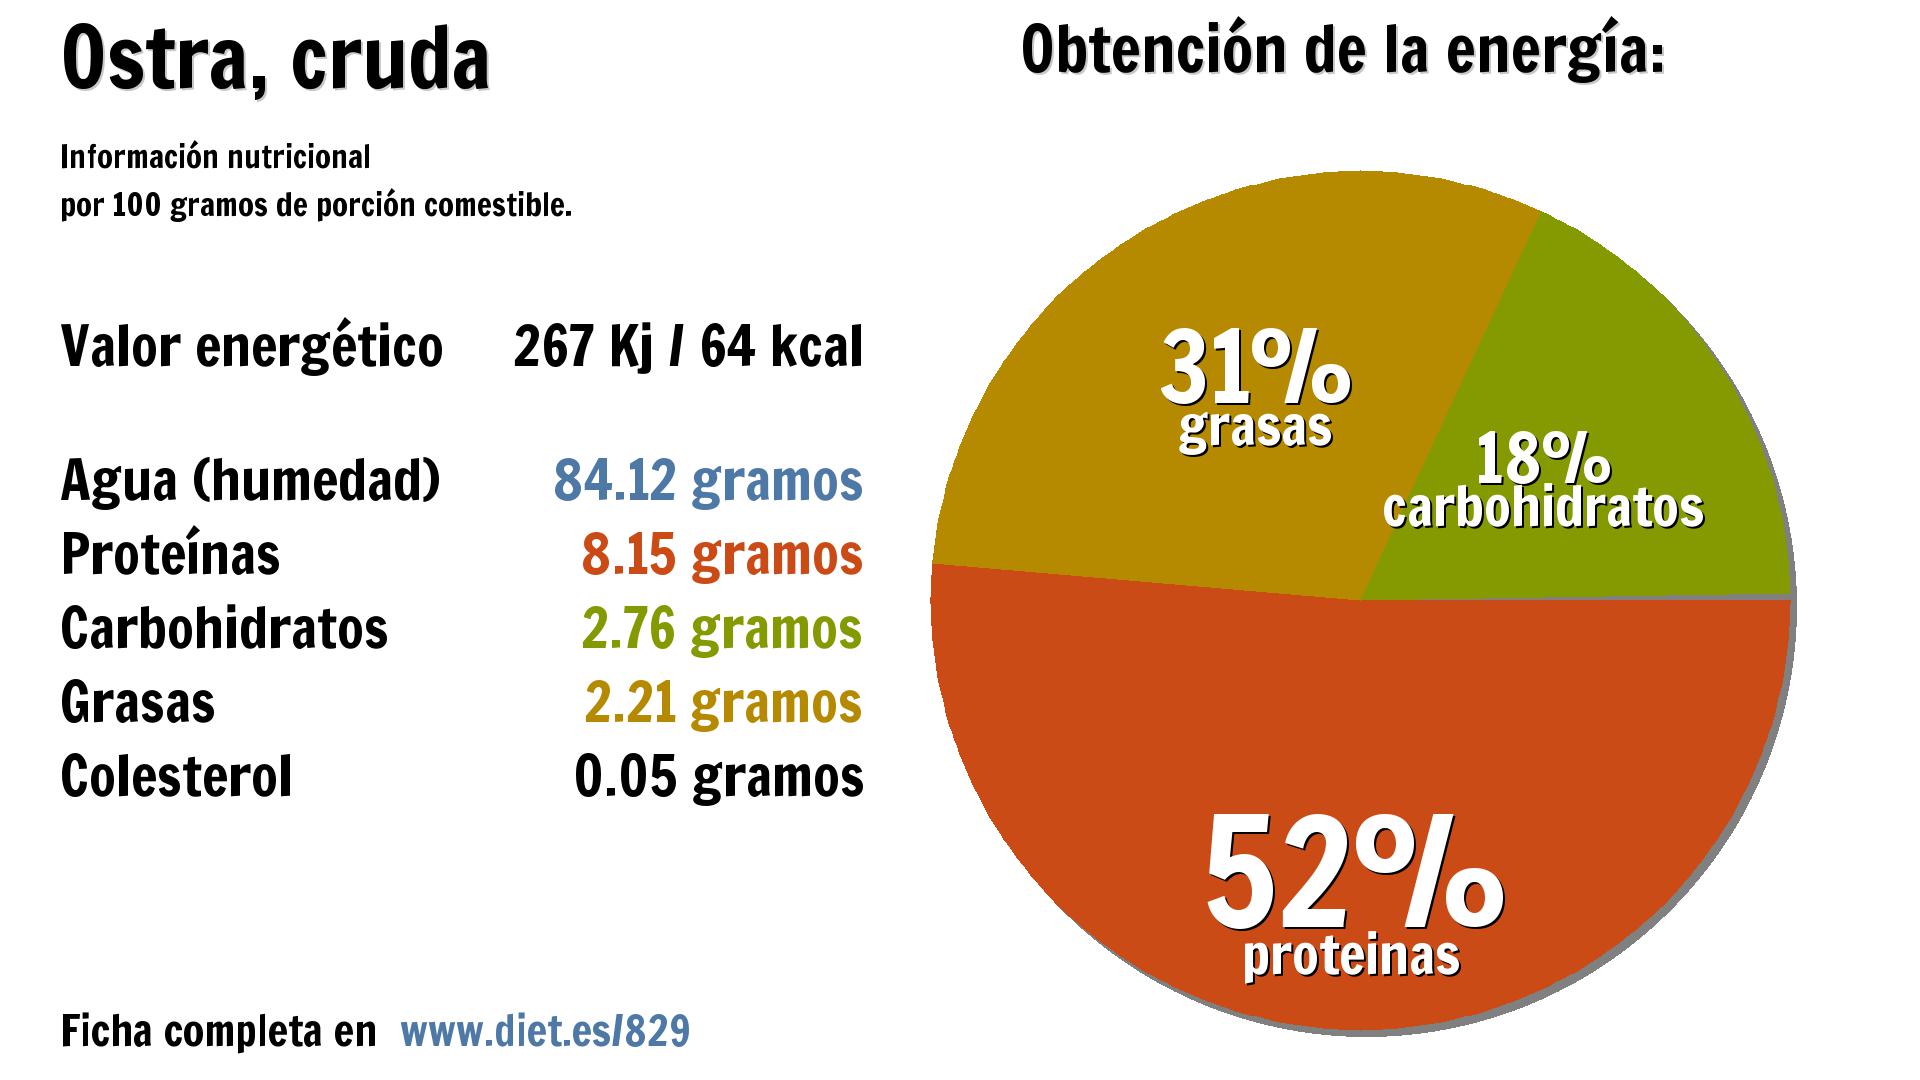 Ostra, cruda: energía 267 Kj, agua 84 g., proteínas 8 g., carbohidratos 3 g. y grasas 2 g.